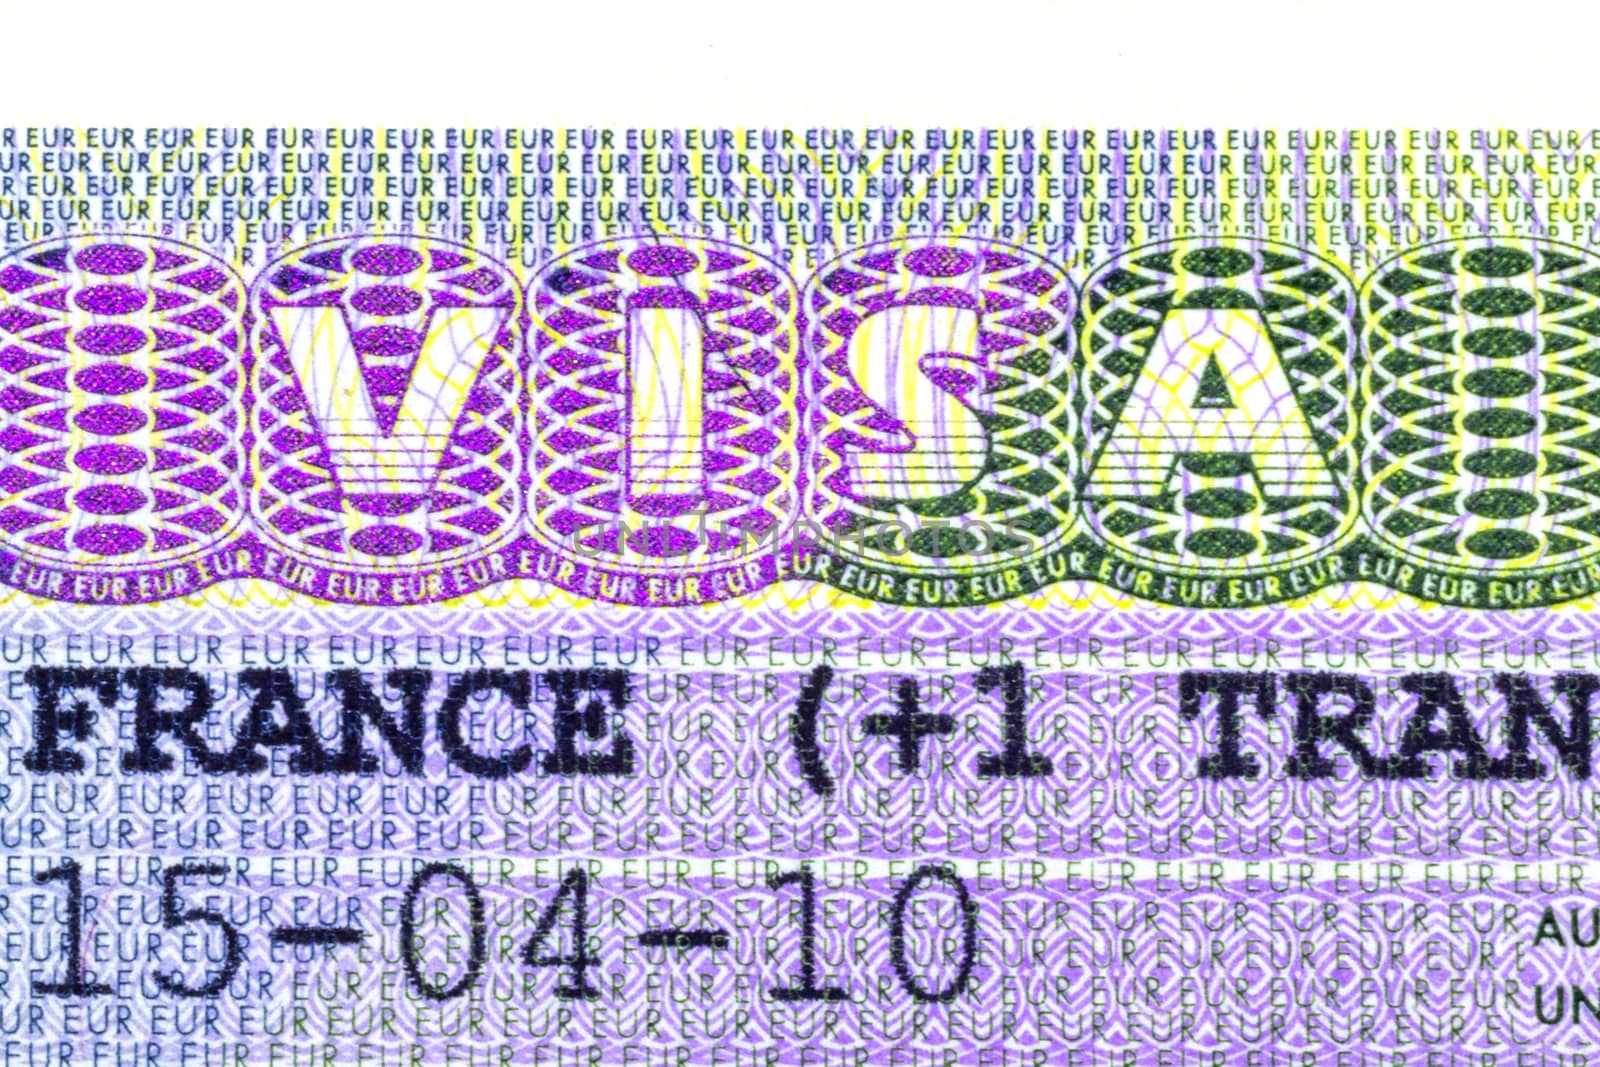 Close up of a Schengen visa allowing the passport holder to travel inside the Schengen treaty territory by ankorlight